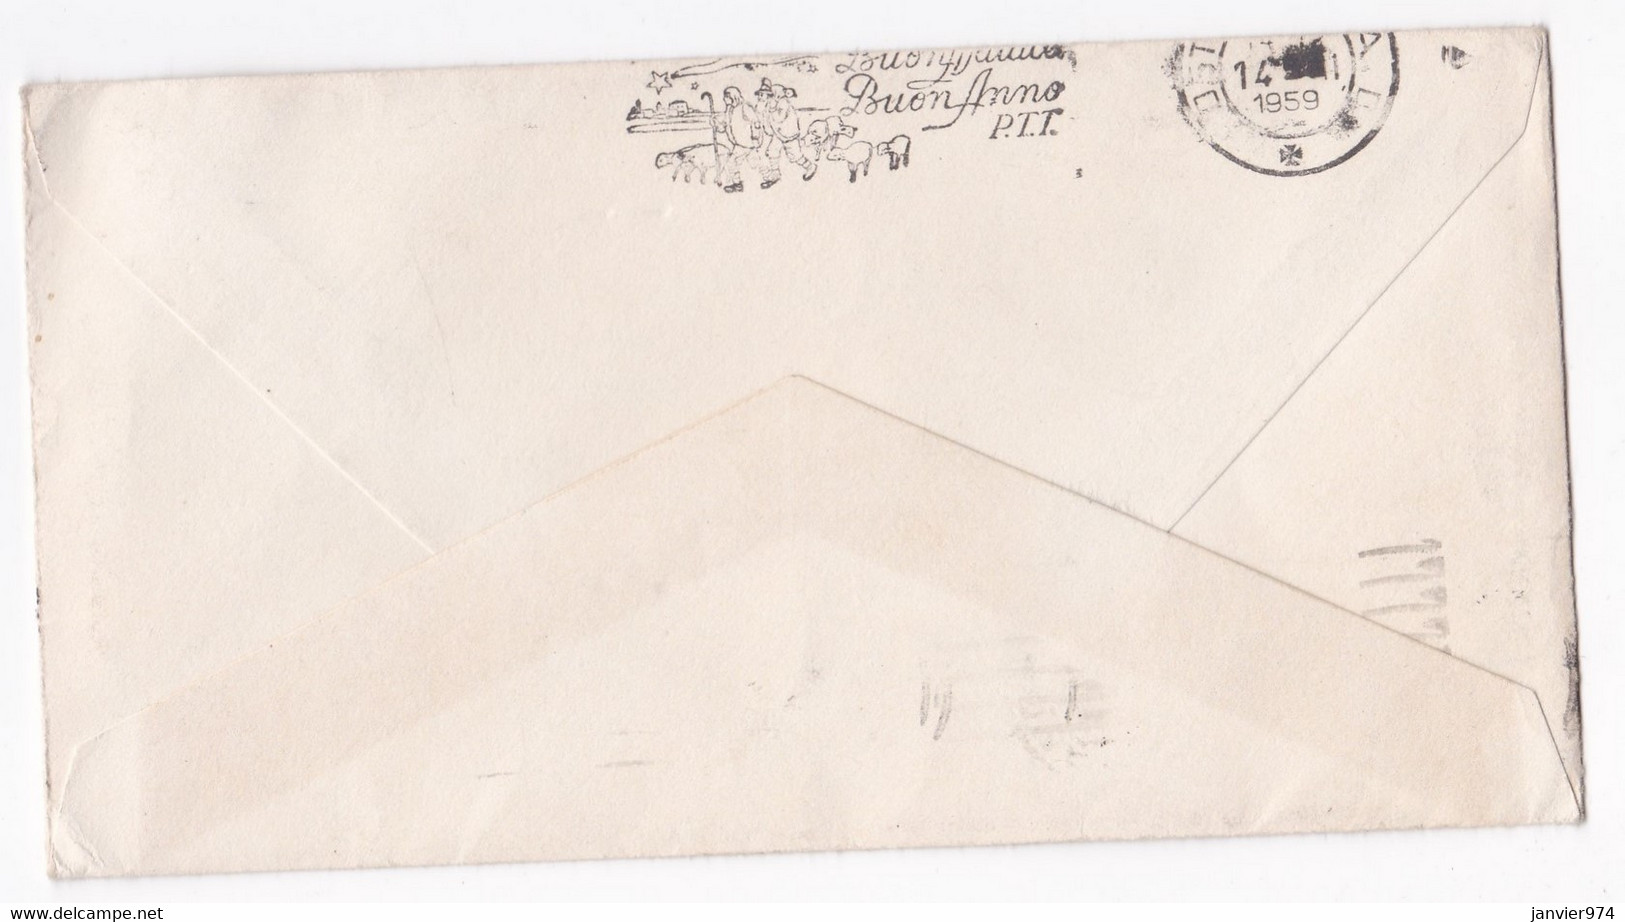 Enveloppe 1959 San Francisco Californie Pour Turin Italie , 2 Timbres - Lettres & Documents